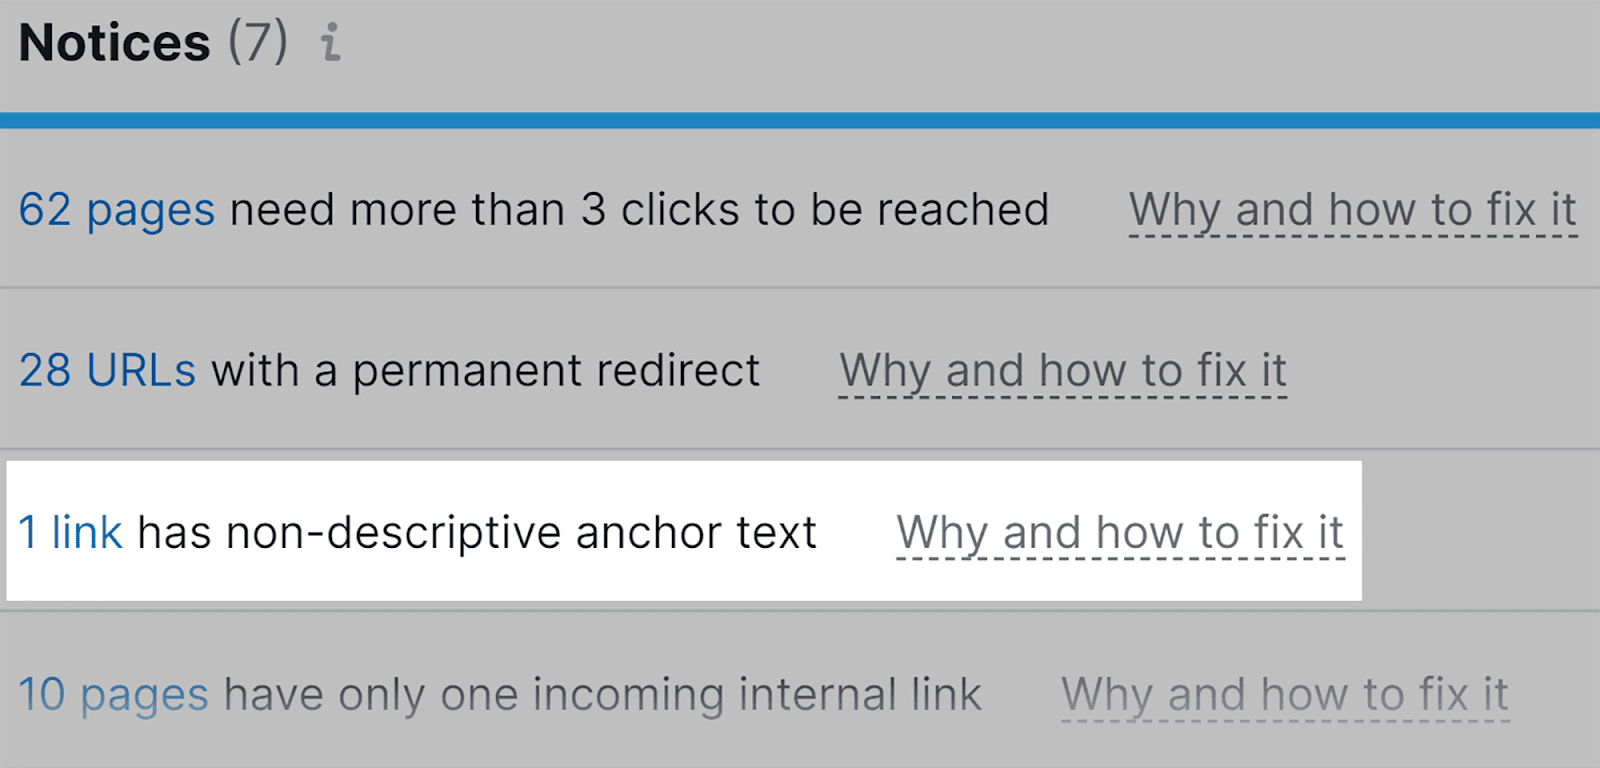 Notices such as links with non-descriptive anchor text